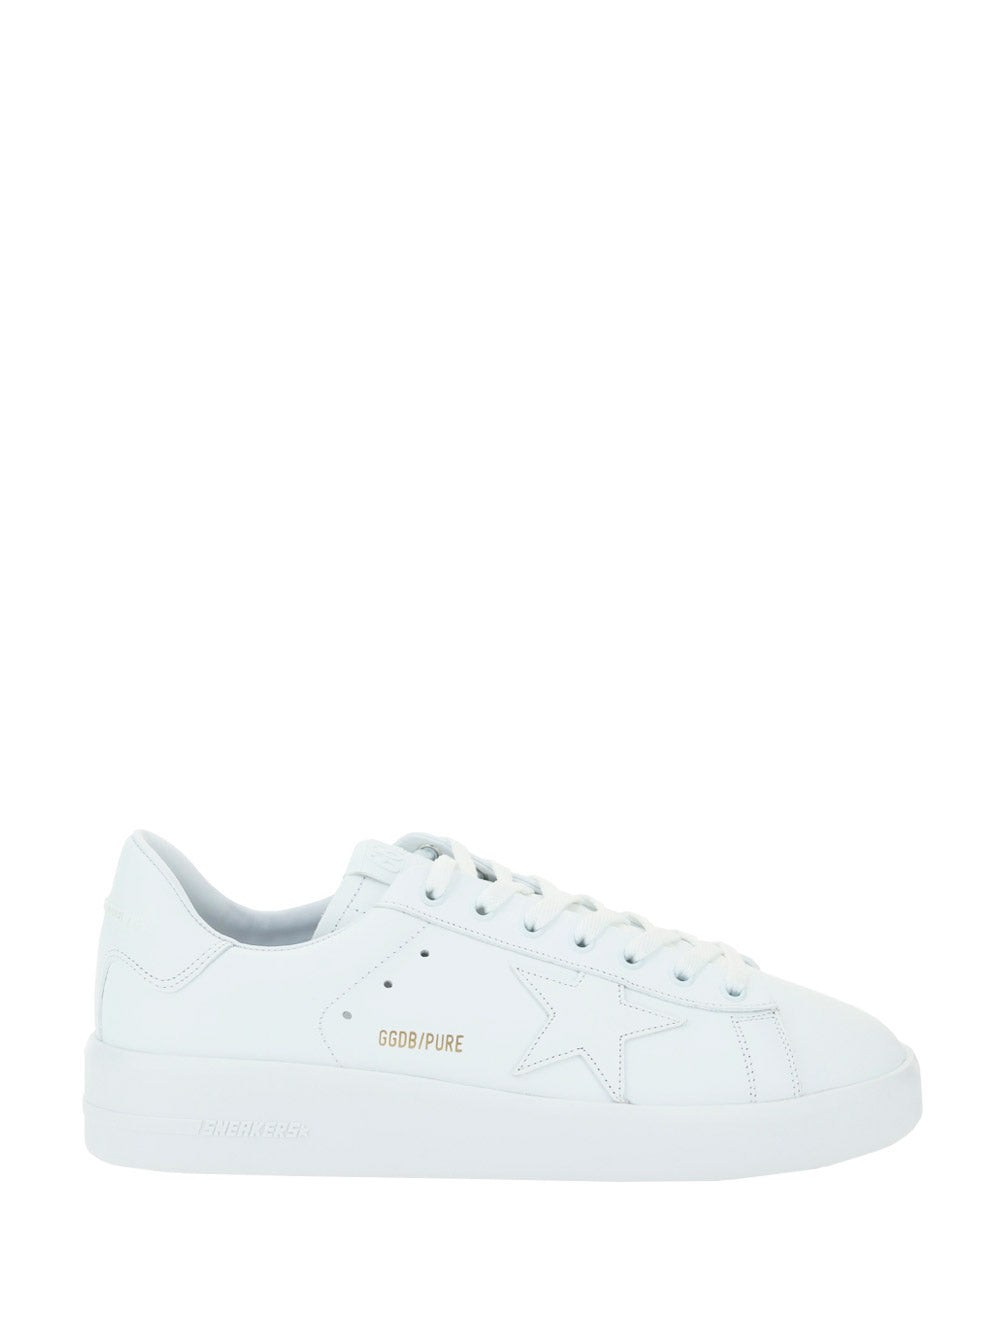 Purestar Sneakers - White